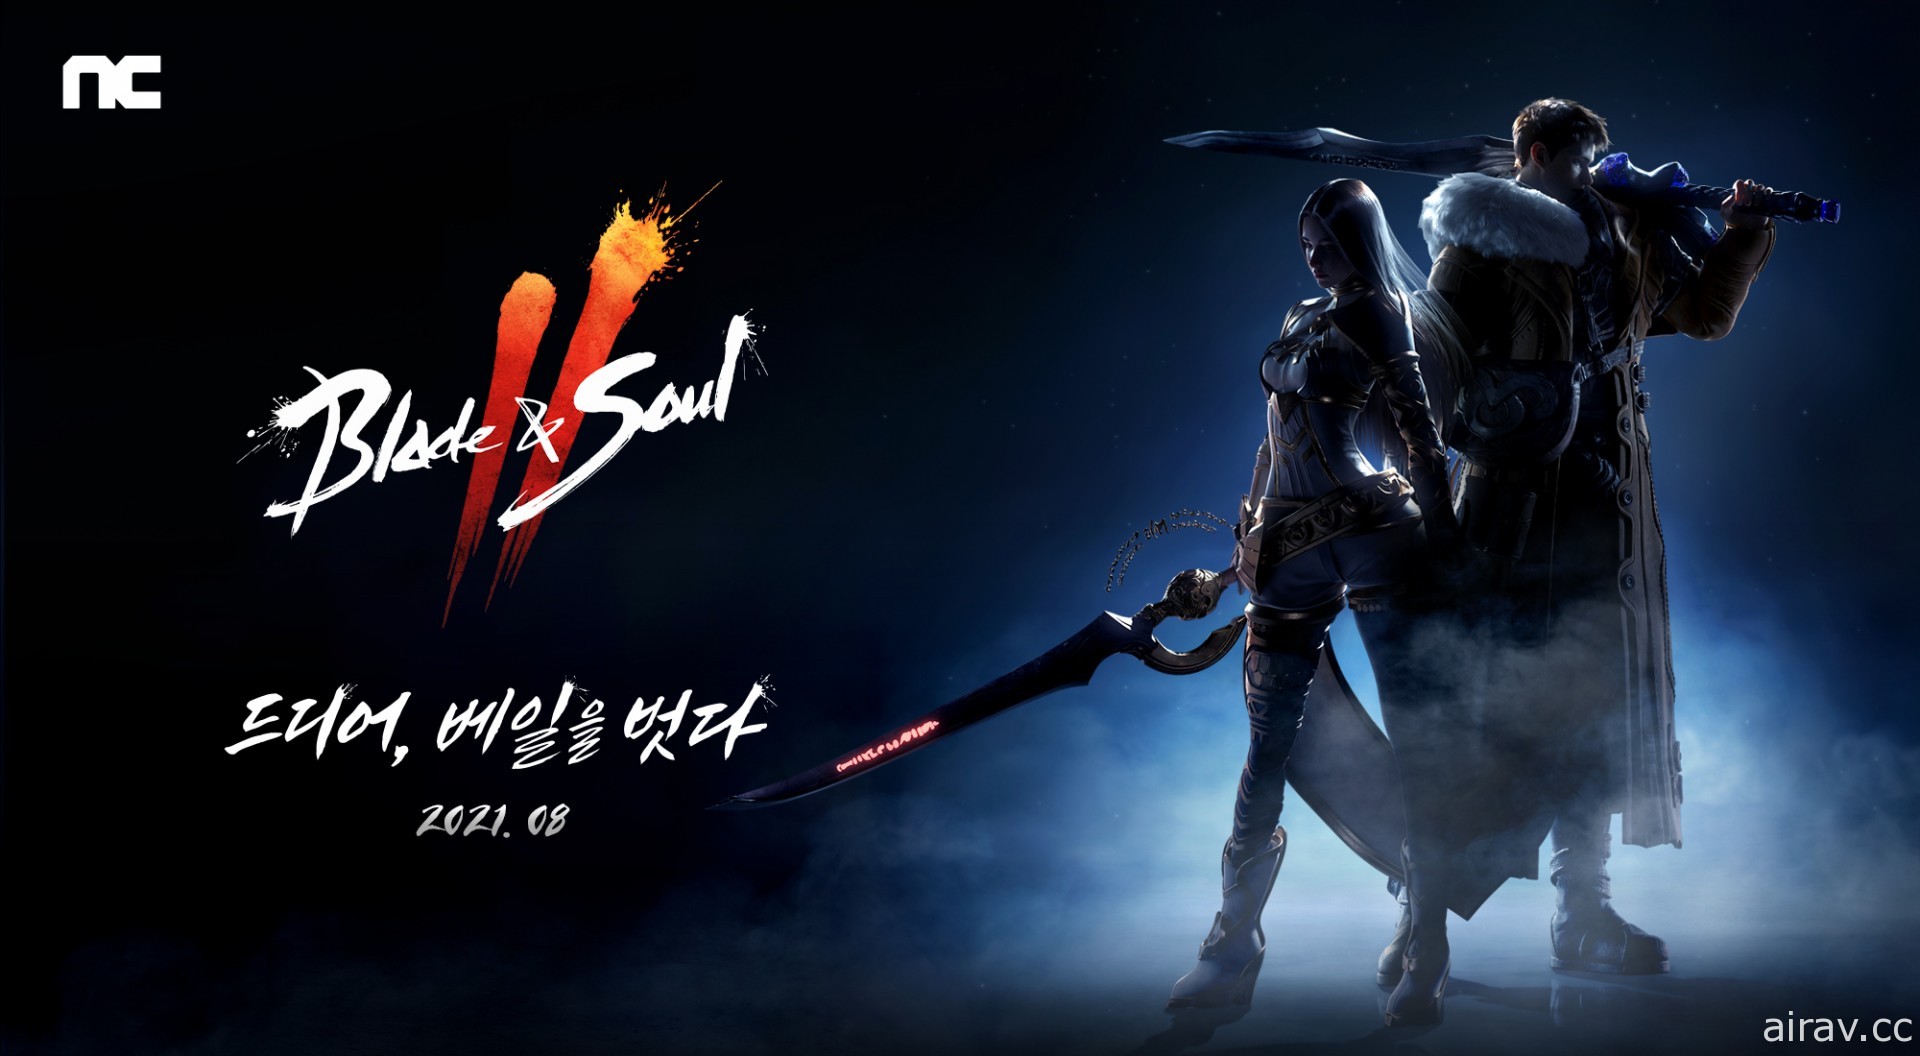 MMORPG《剑灵 2》确认将于 8 月在韩国推出 于官方网站释出最新宣传影片及角色服装